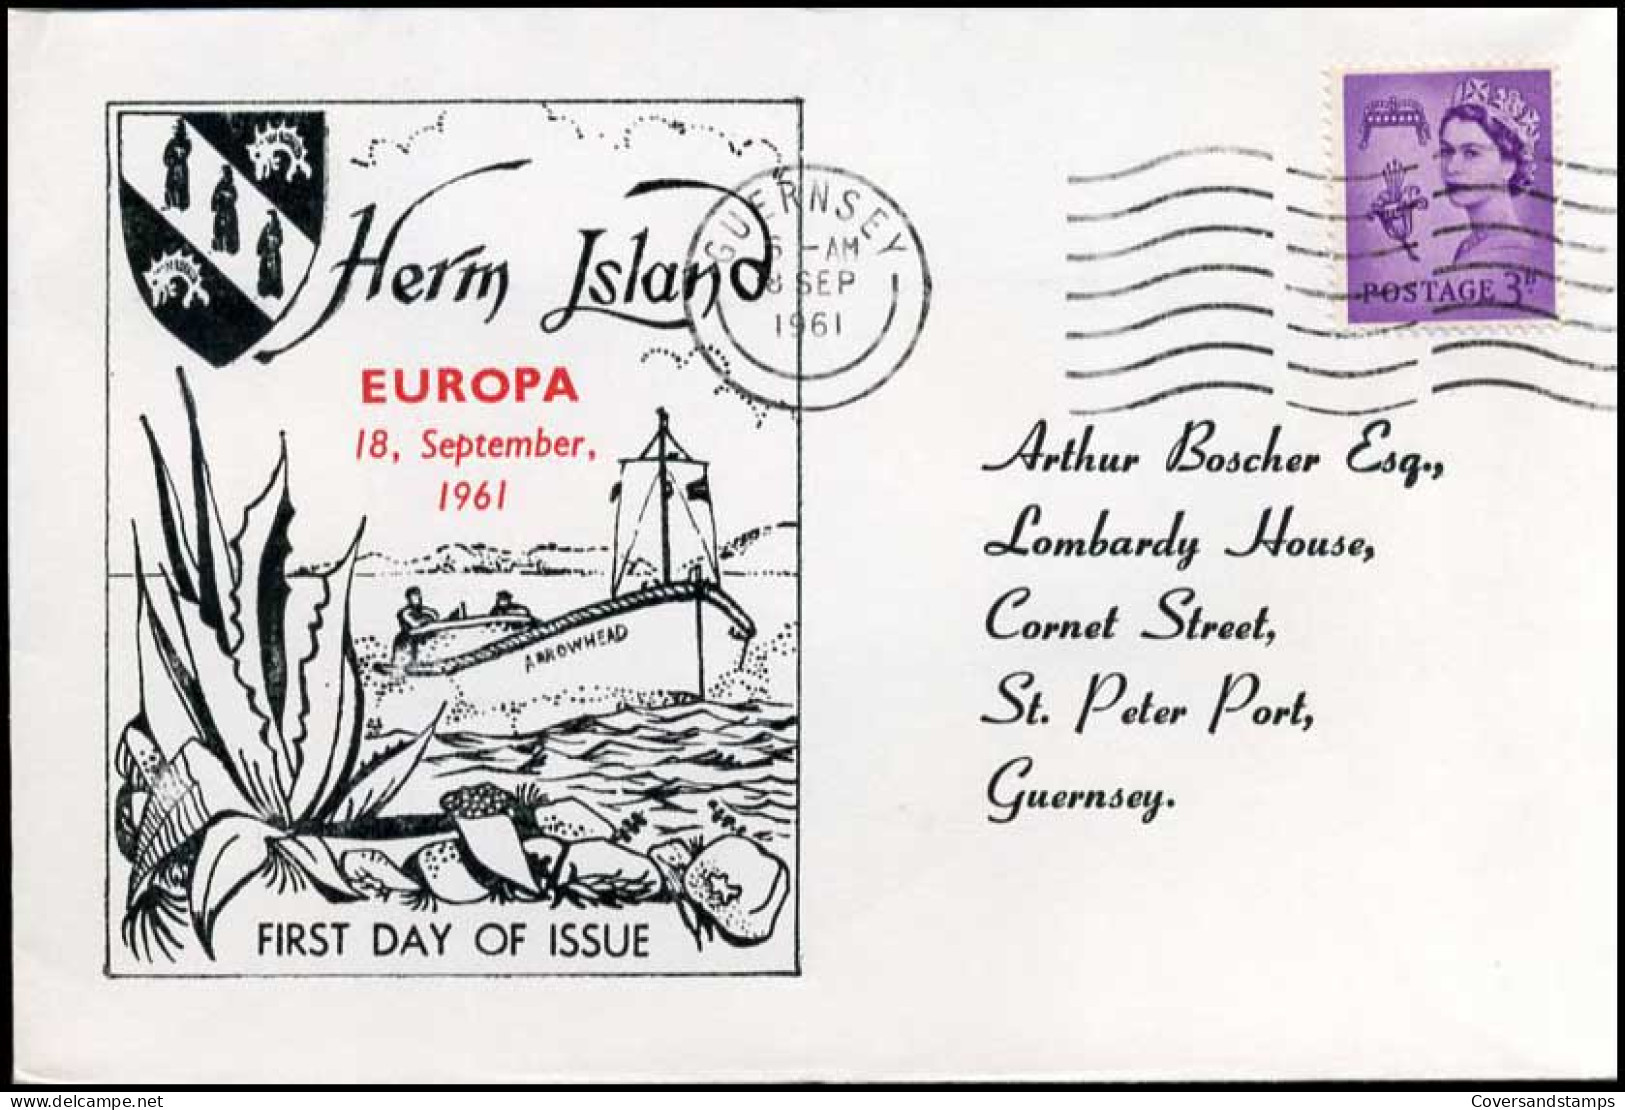 Herm Island - FDC - Europa - 1961